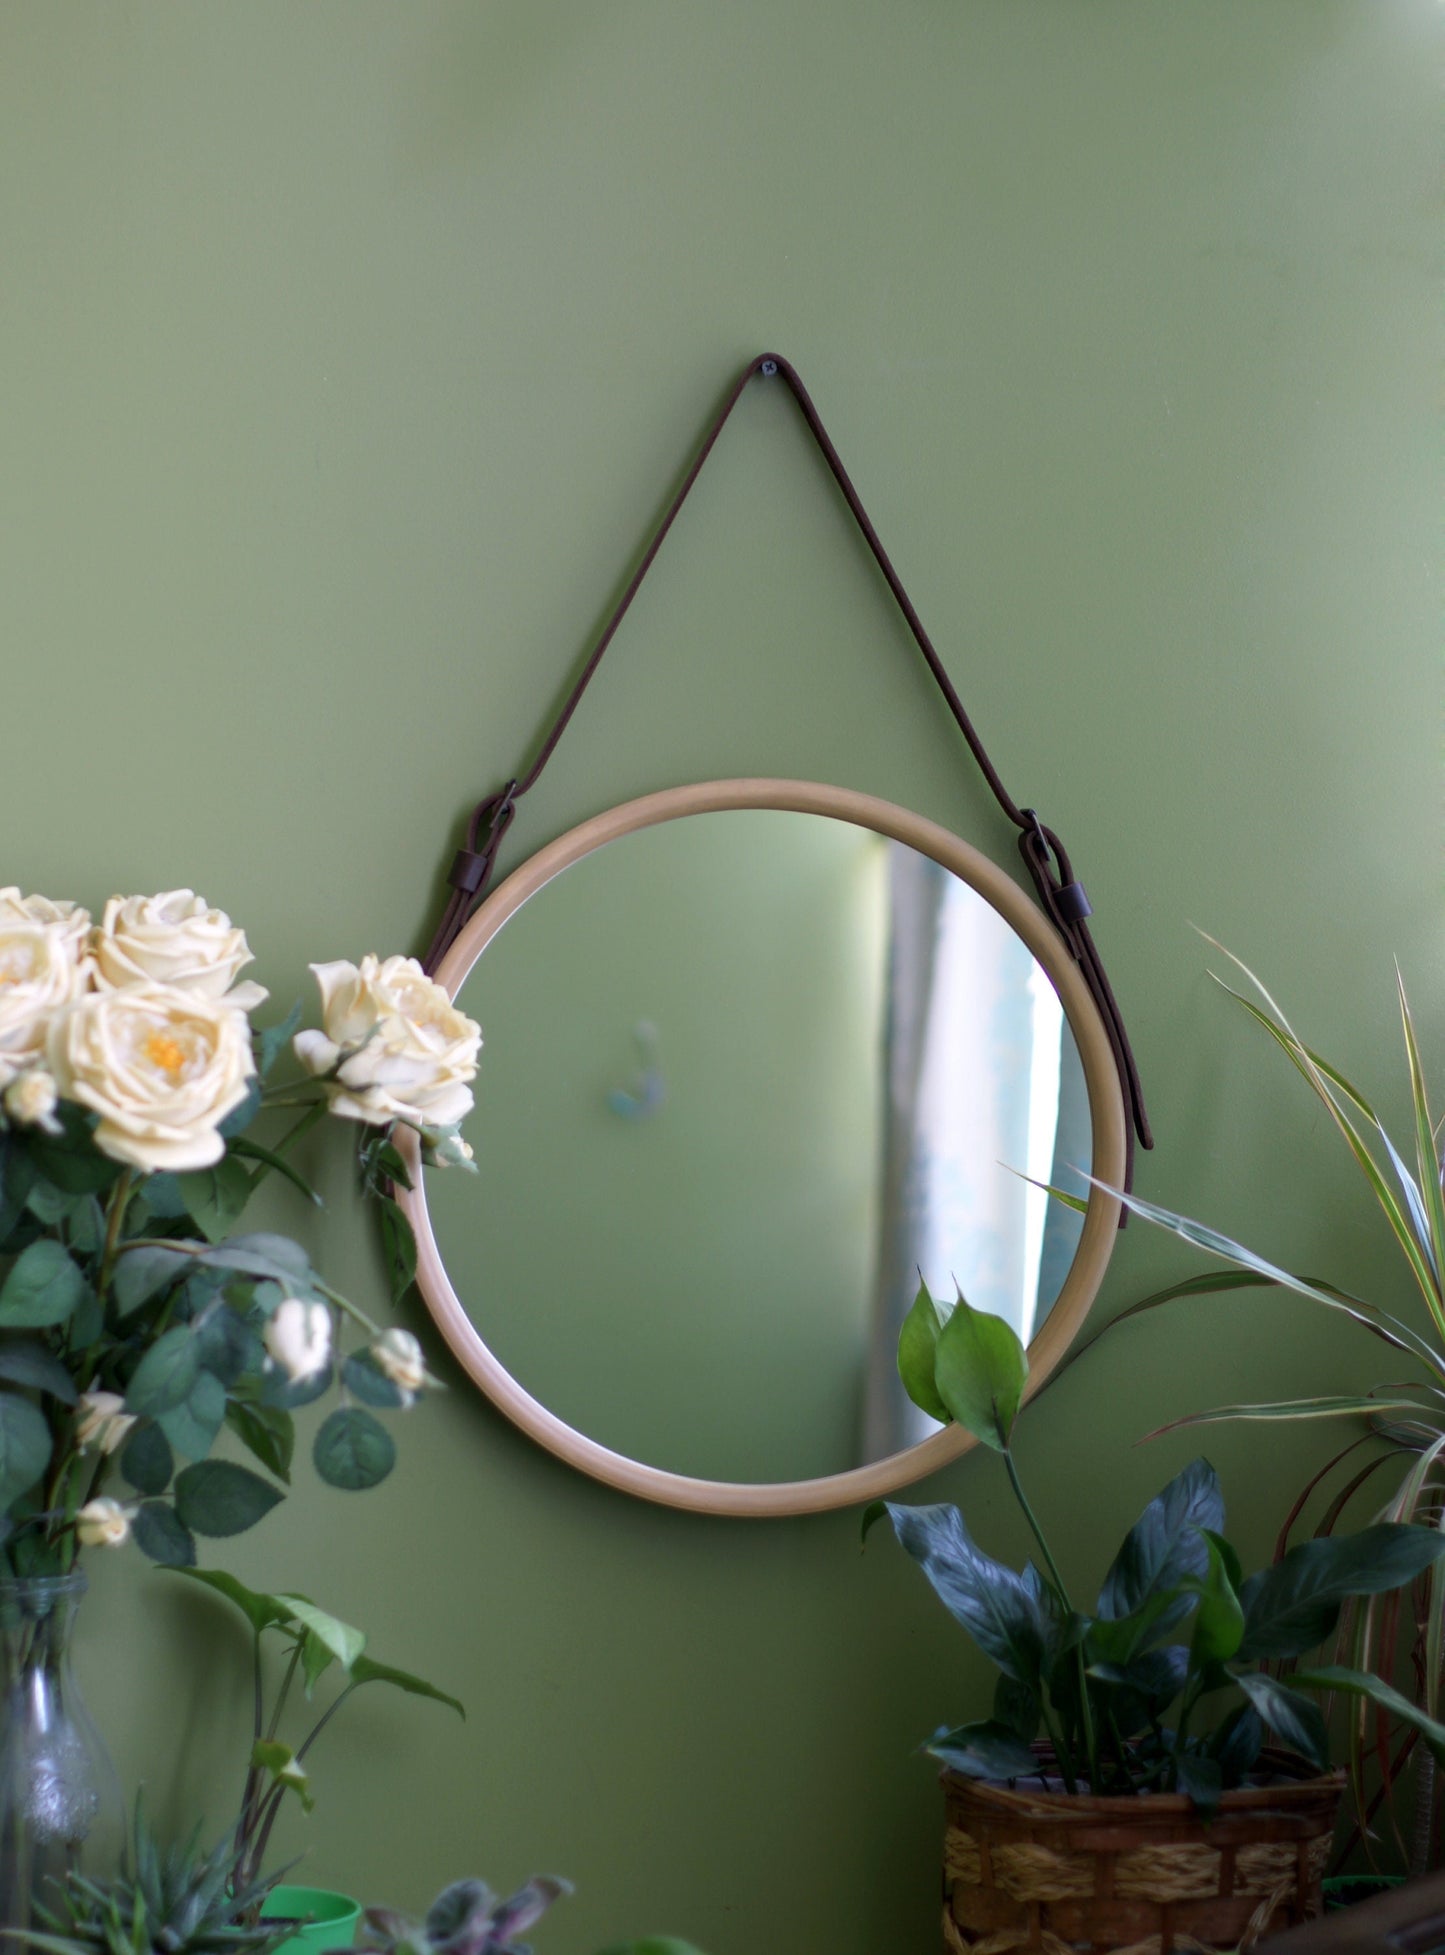 Кругле туалетне дзеркало, коричневе фермерське дзеркало, дерев’яне дзеркало, сучасне дзеркало, дзеркало у ванній кімнаті, шкіряне дзеркало, сучасне настінне дзеркало, підвісне дзеркало